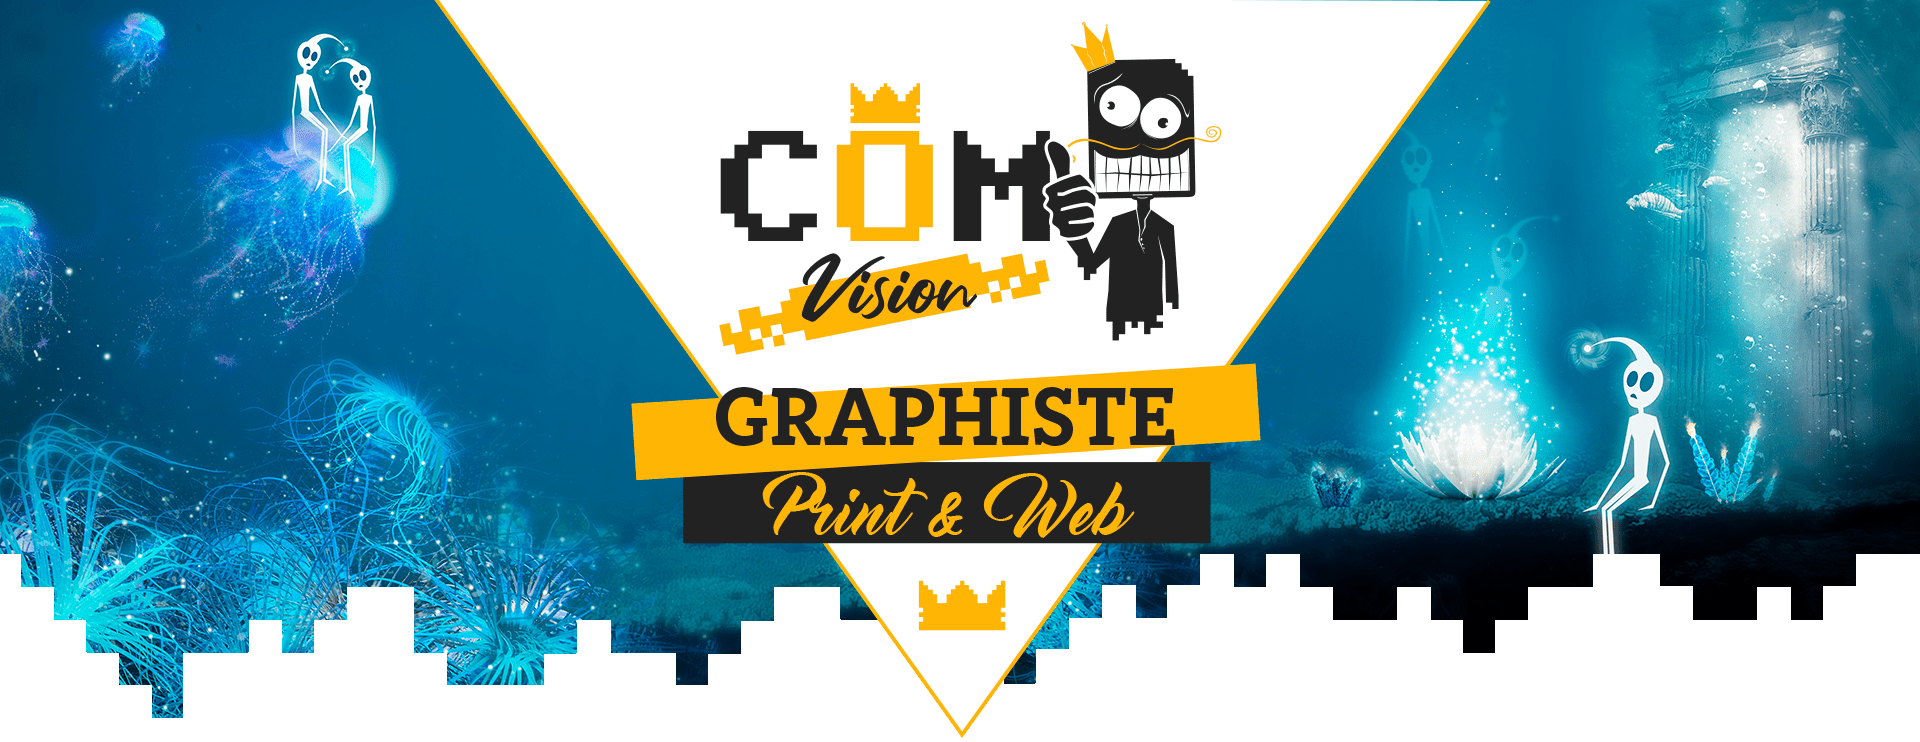 com1vision graphiste print web